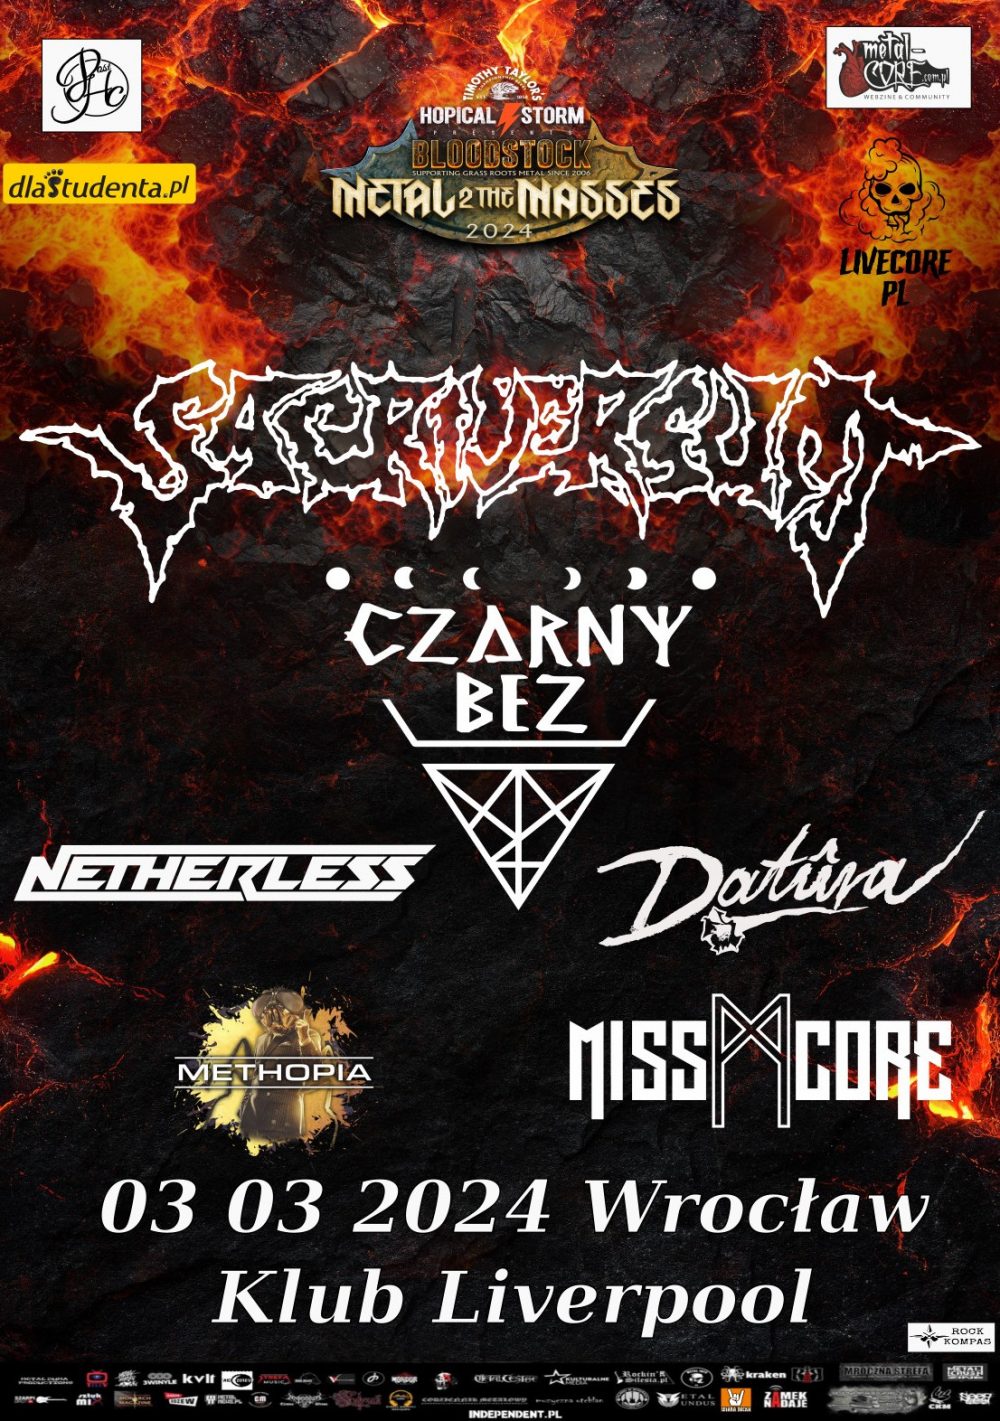 Bloodstock Metal 2 The Masses Poland - SACRIVERSUM + CZARNY BEZ + DATÛRA + METHOPIA + NETHERLESS + MISSCORE